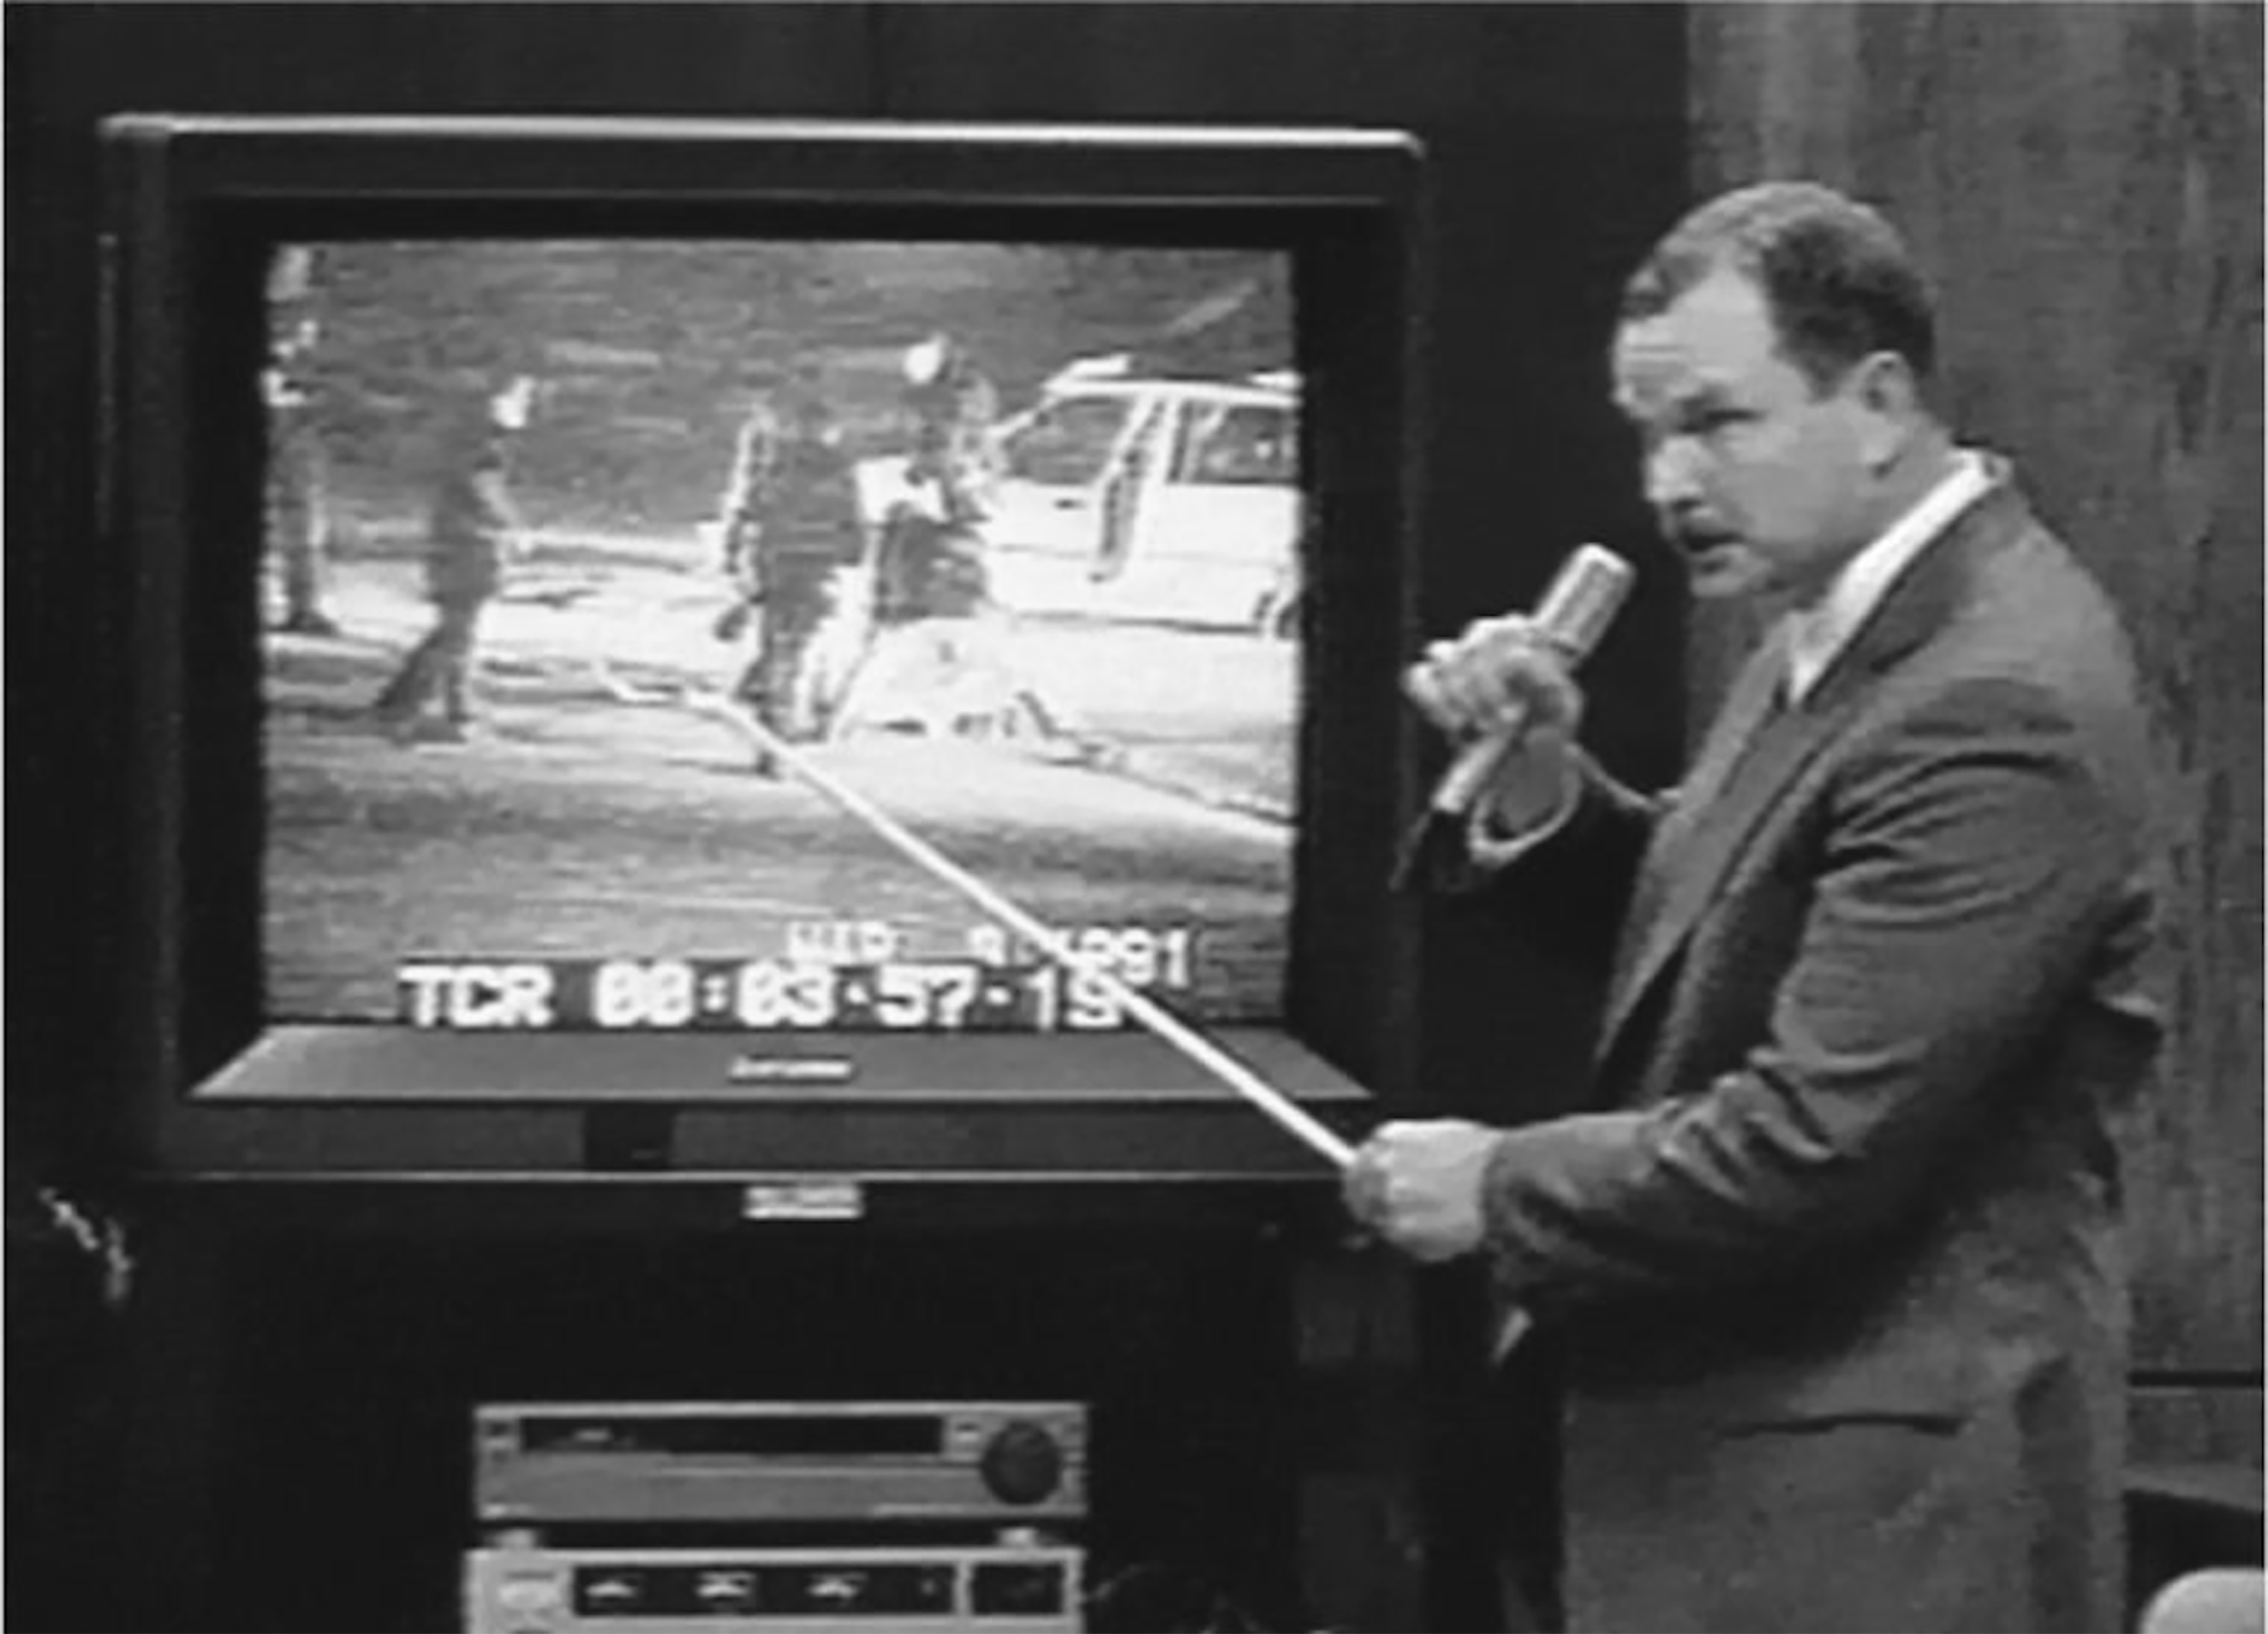 Sergeant Duke analysiert das Rodney King Video (© Co-Operative Action (2018), S. 415)